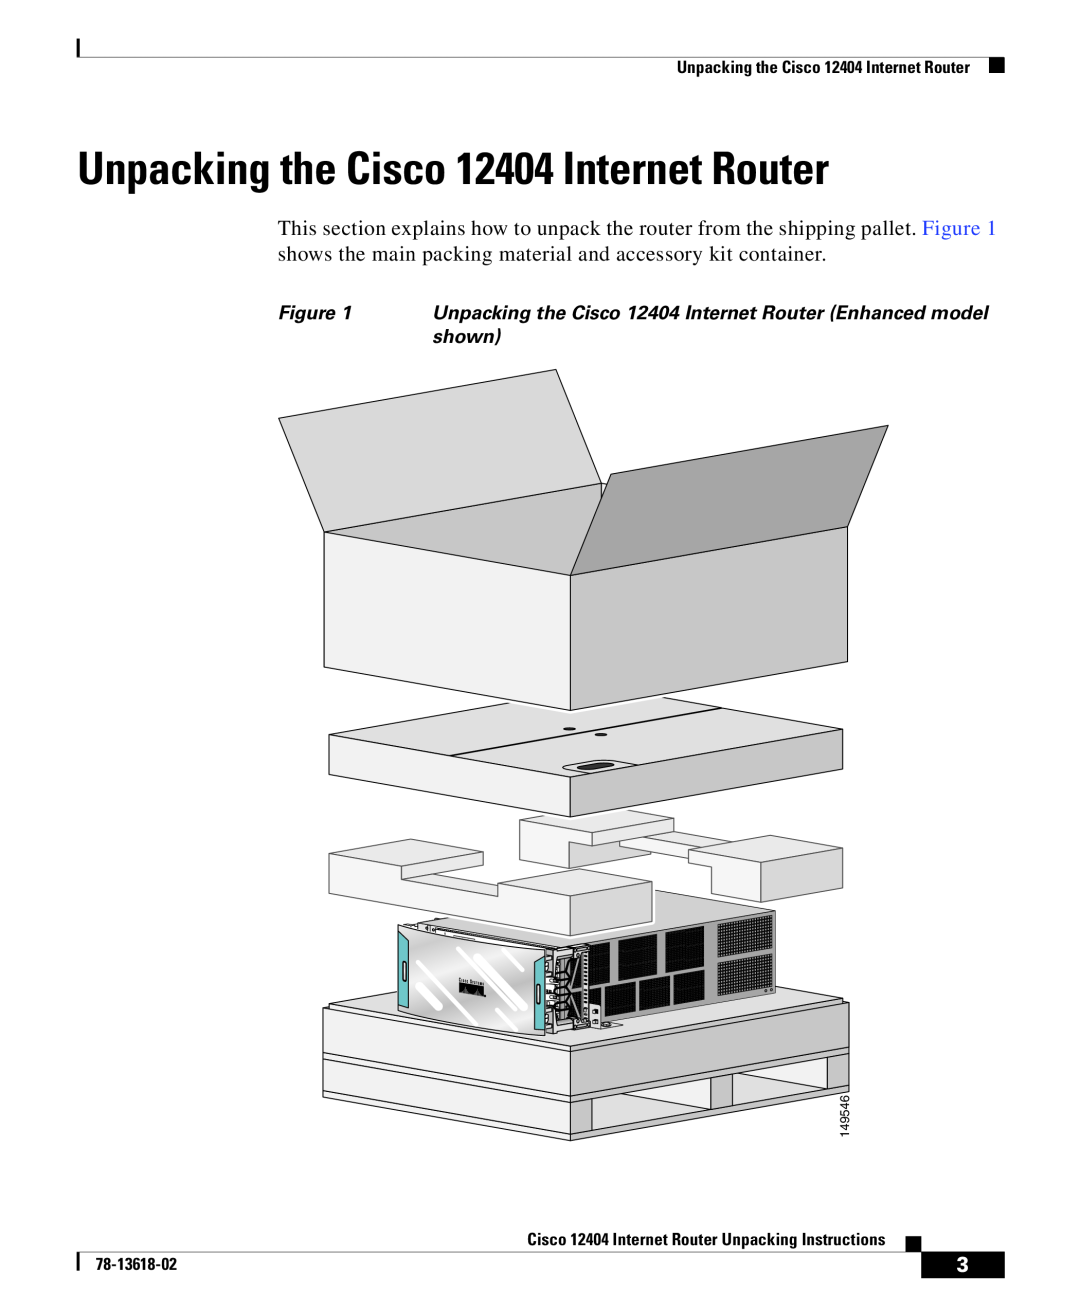 Cisco Systems Unpacking the Cisco 12404 Internet Router, shown, Cisco 12404 Internet Router Unpacking Instructions 